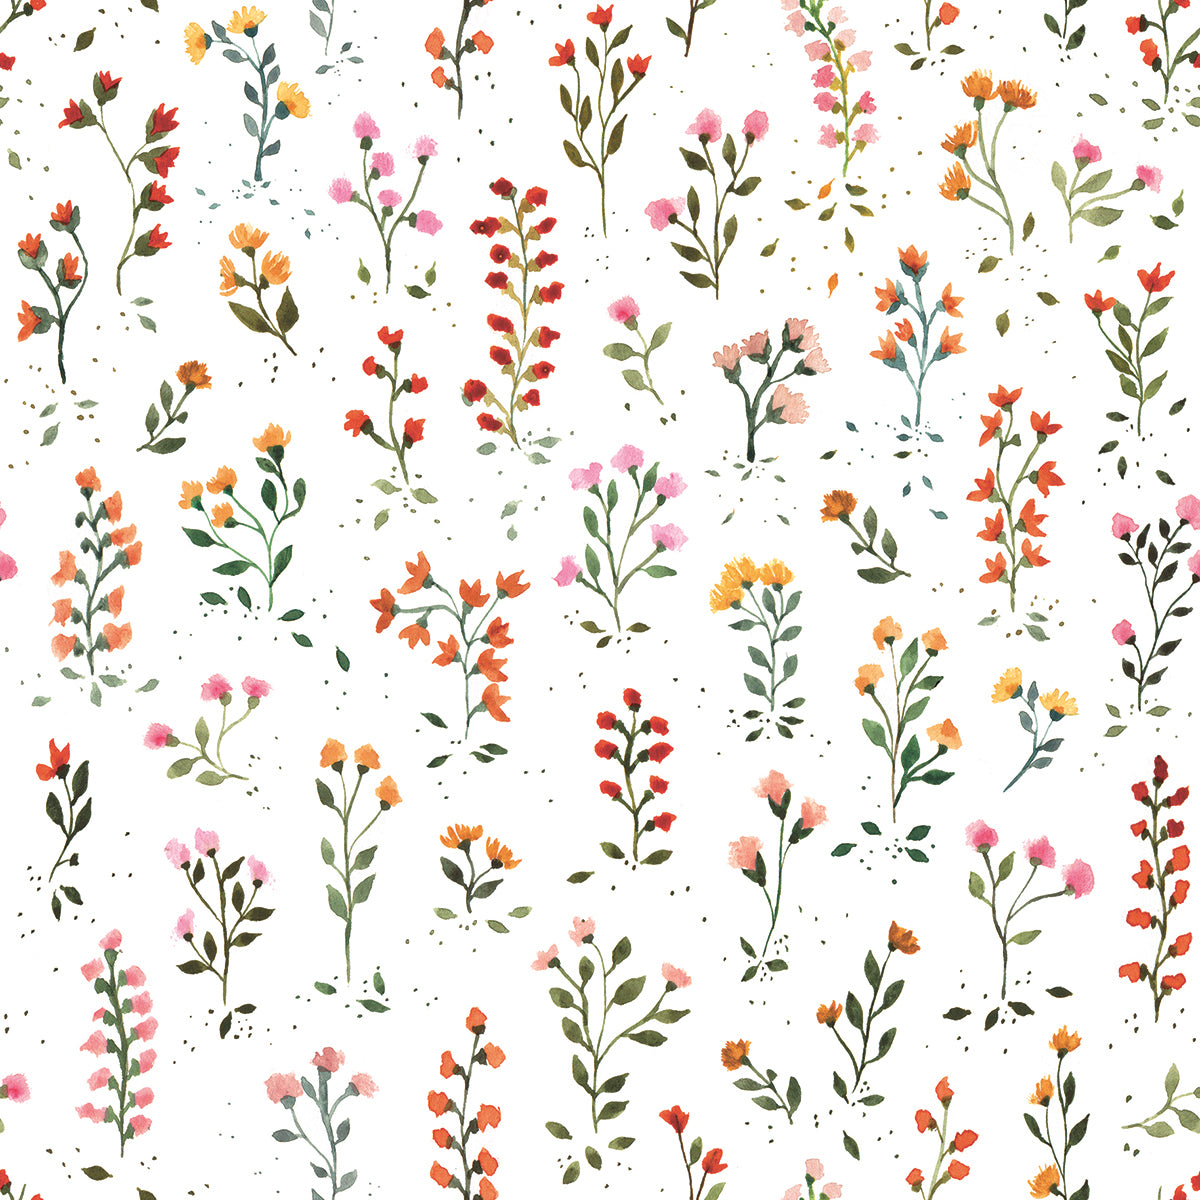 Pretty flowers wallpaper ds